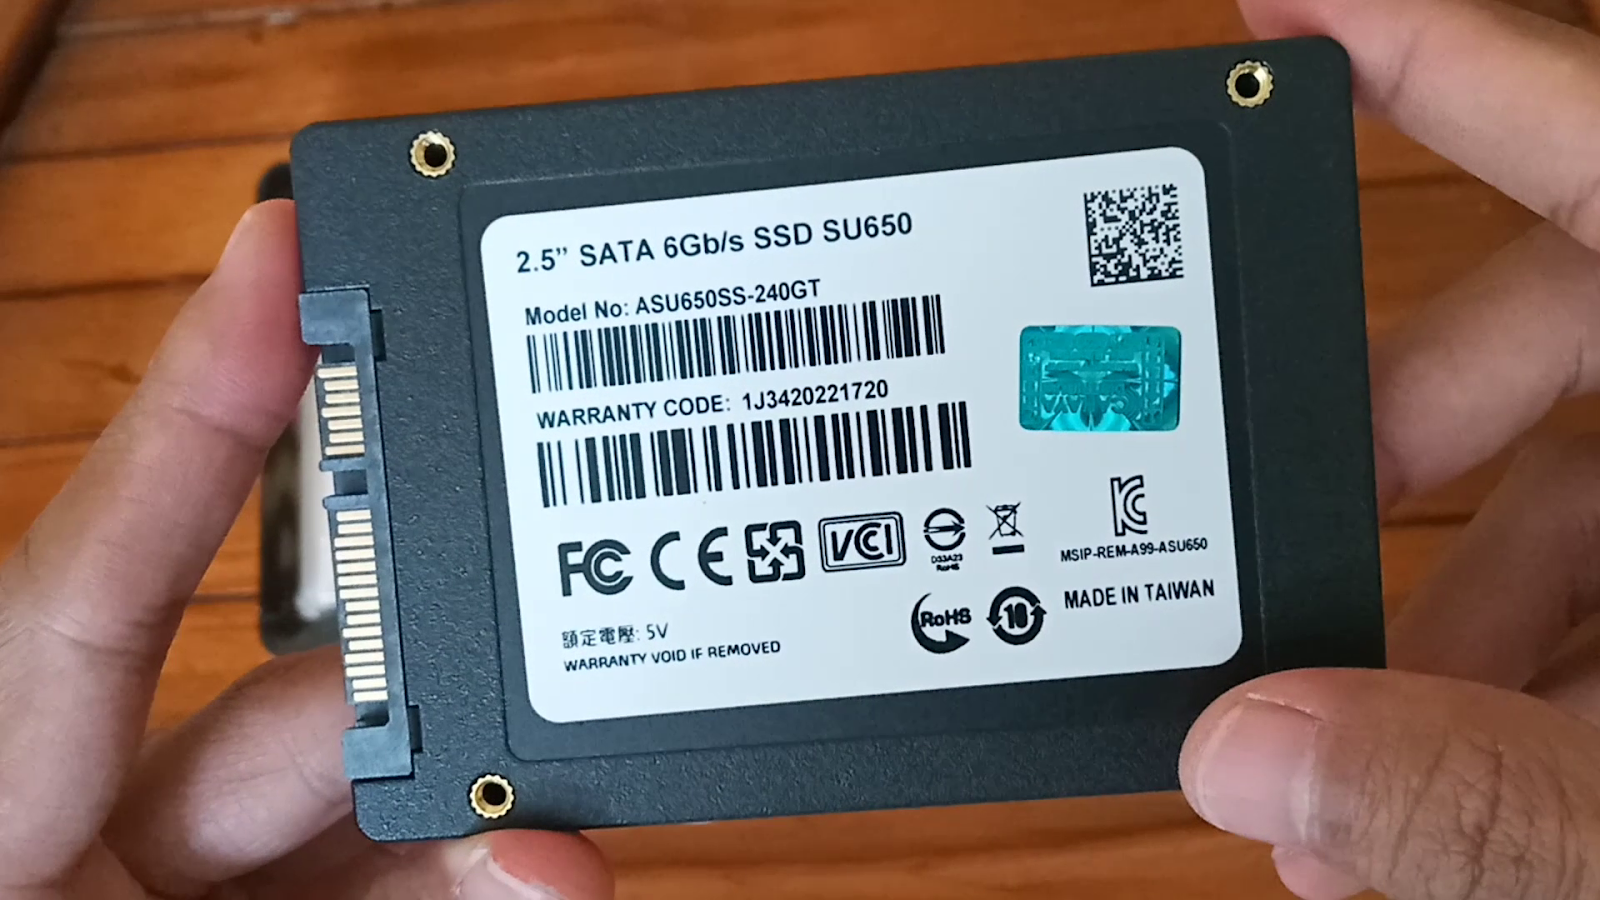 Ssd 650. SSD su650 512. SSD su650 характеристики. Накопитель SSD A-data su650 512gb (asu650ss-512gt-r).